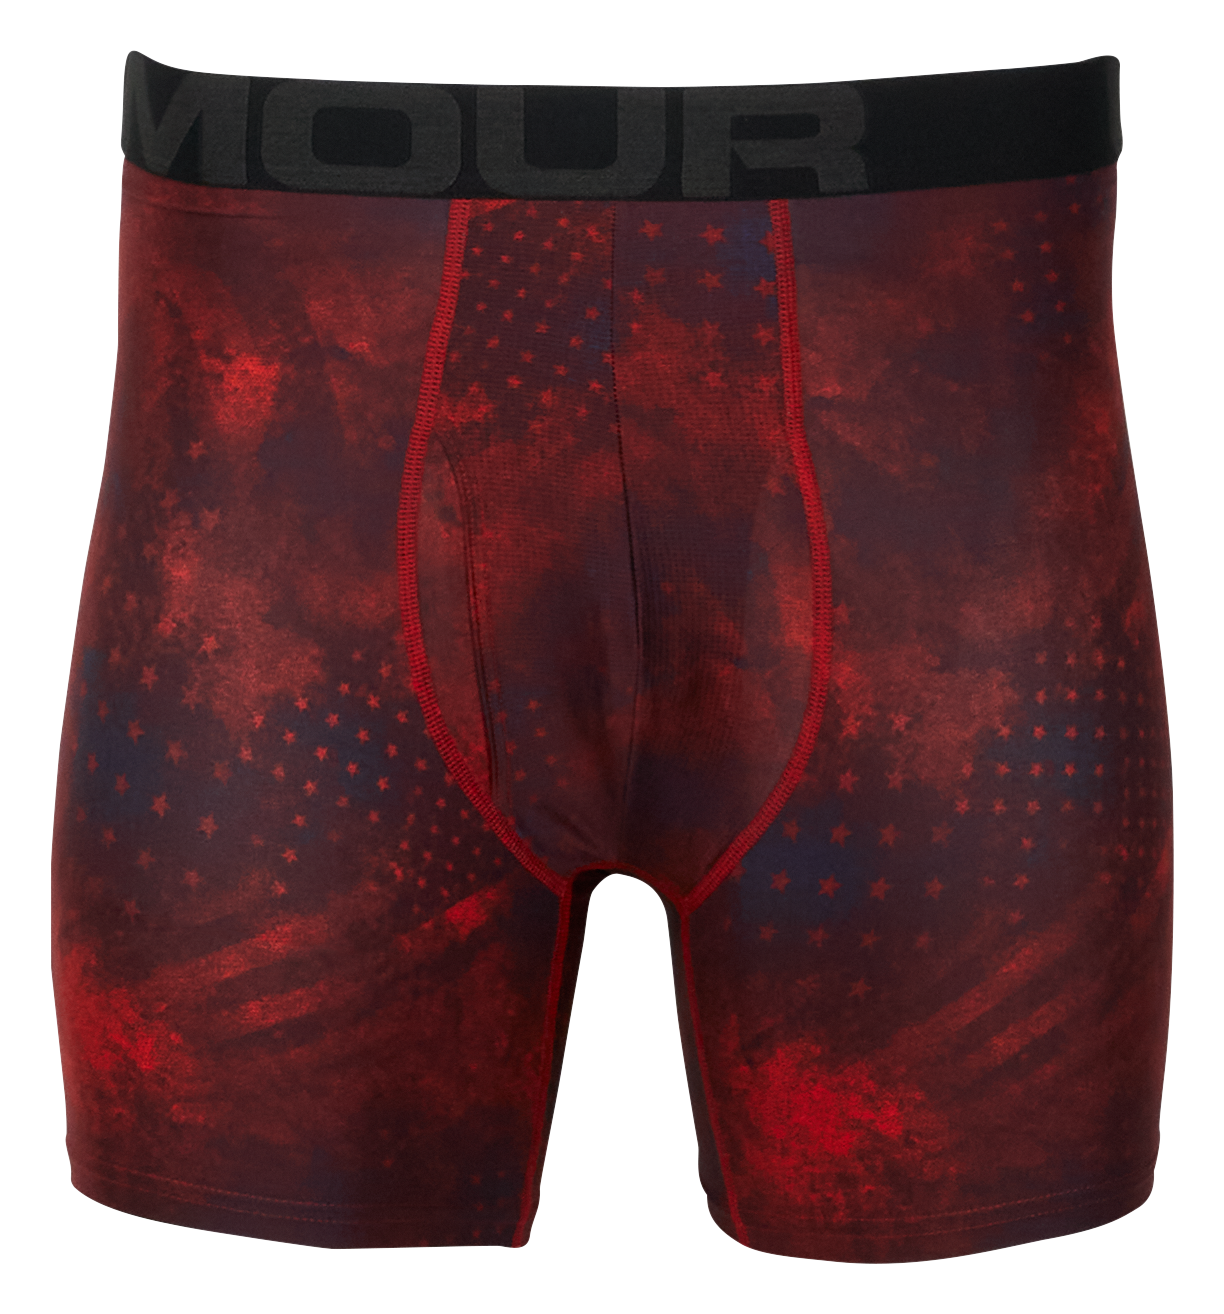 Under Armour Tech 6"" Patterned Boxerjock Shorts for Men